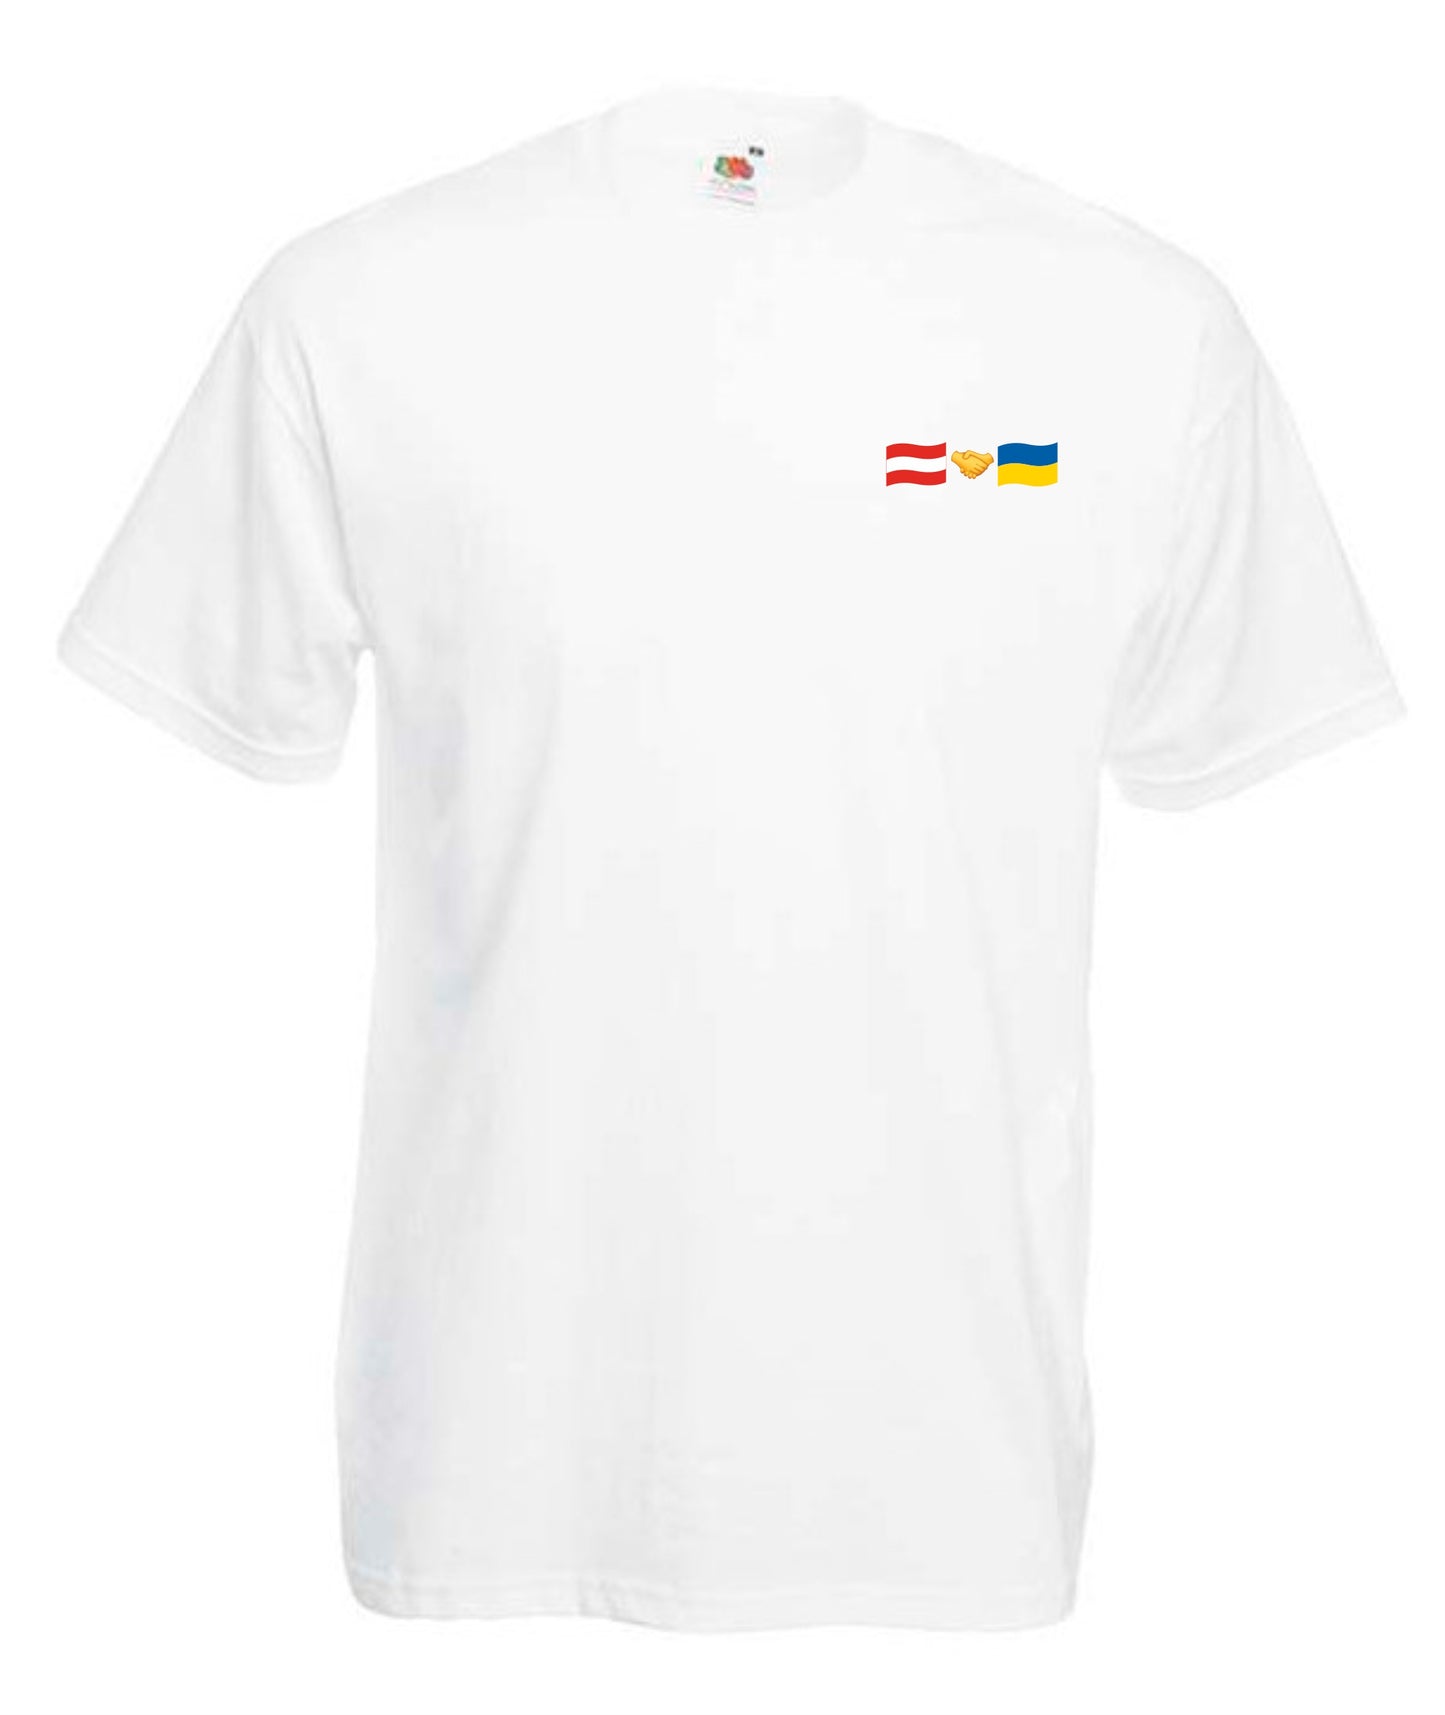 T-shirt Austria + Ukraine (small logo)